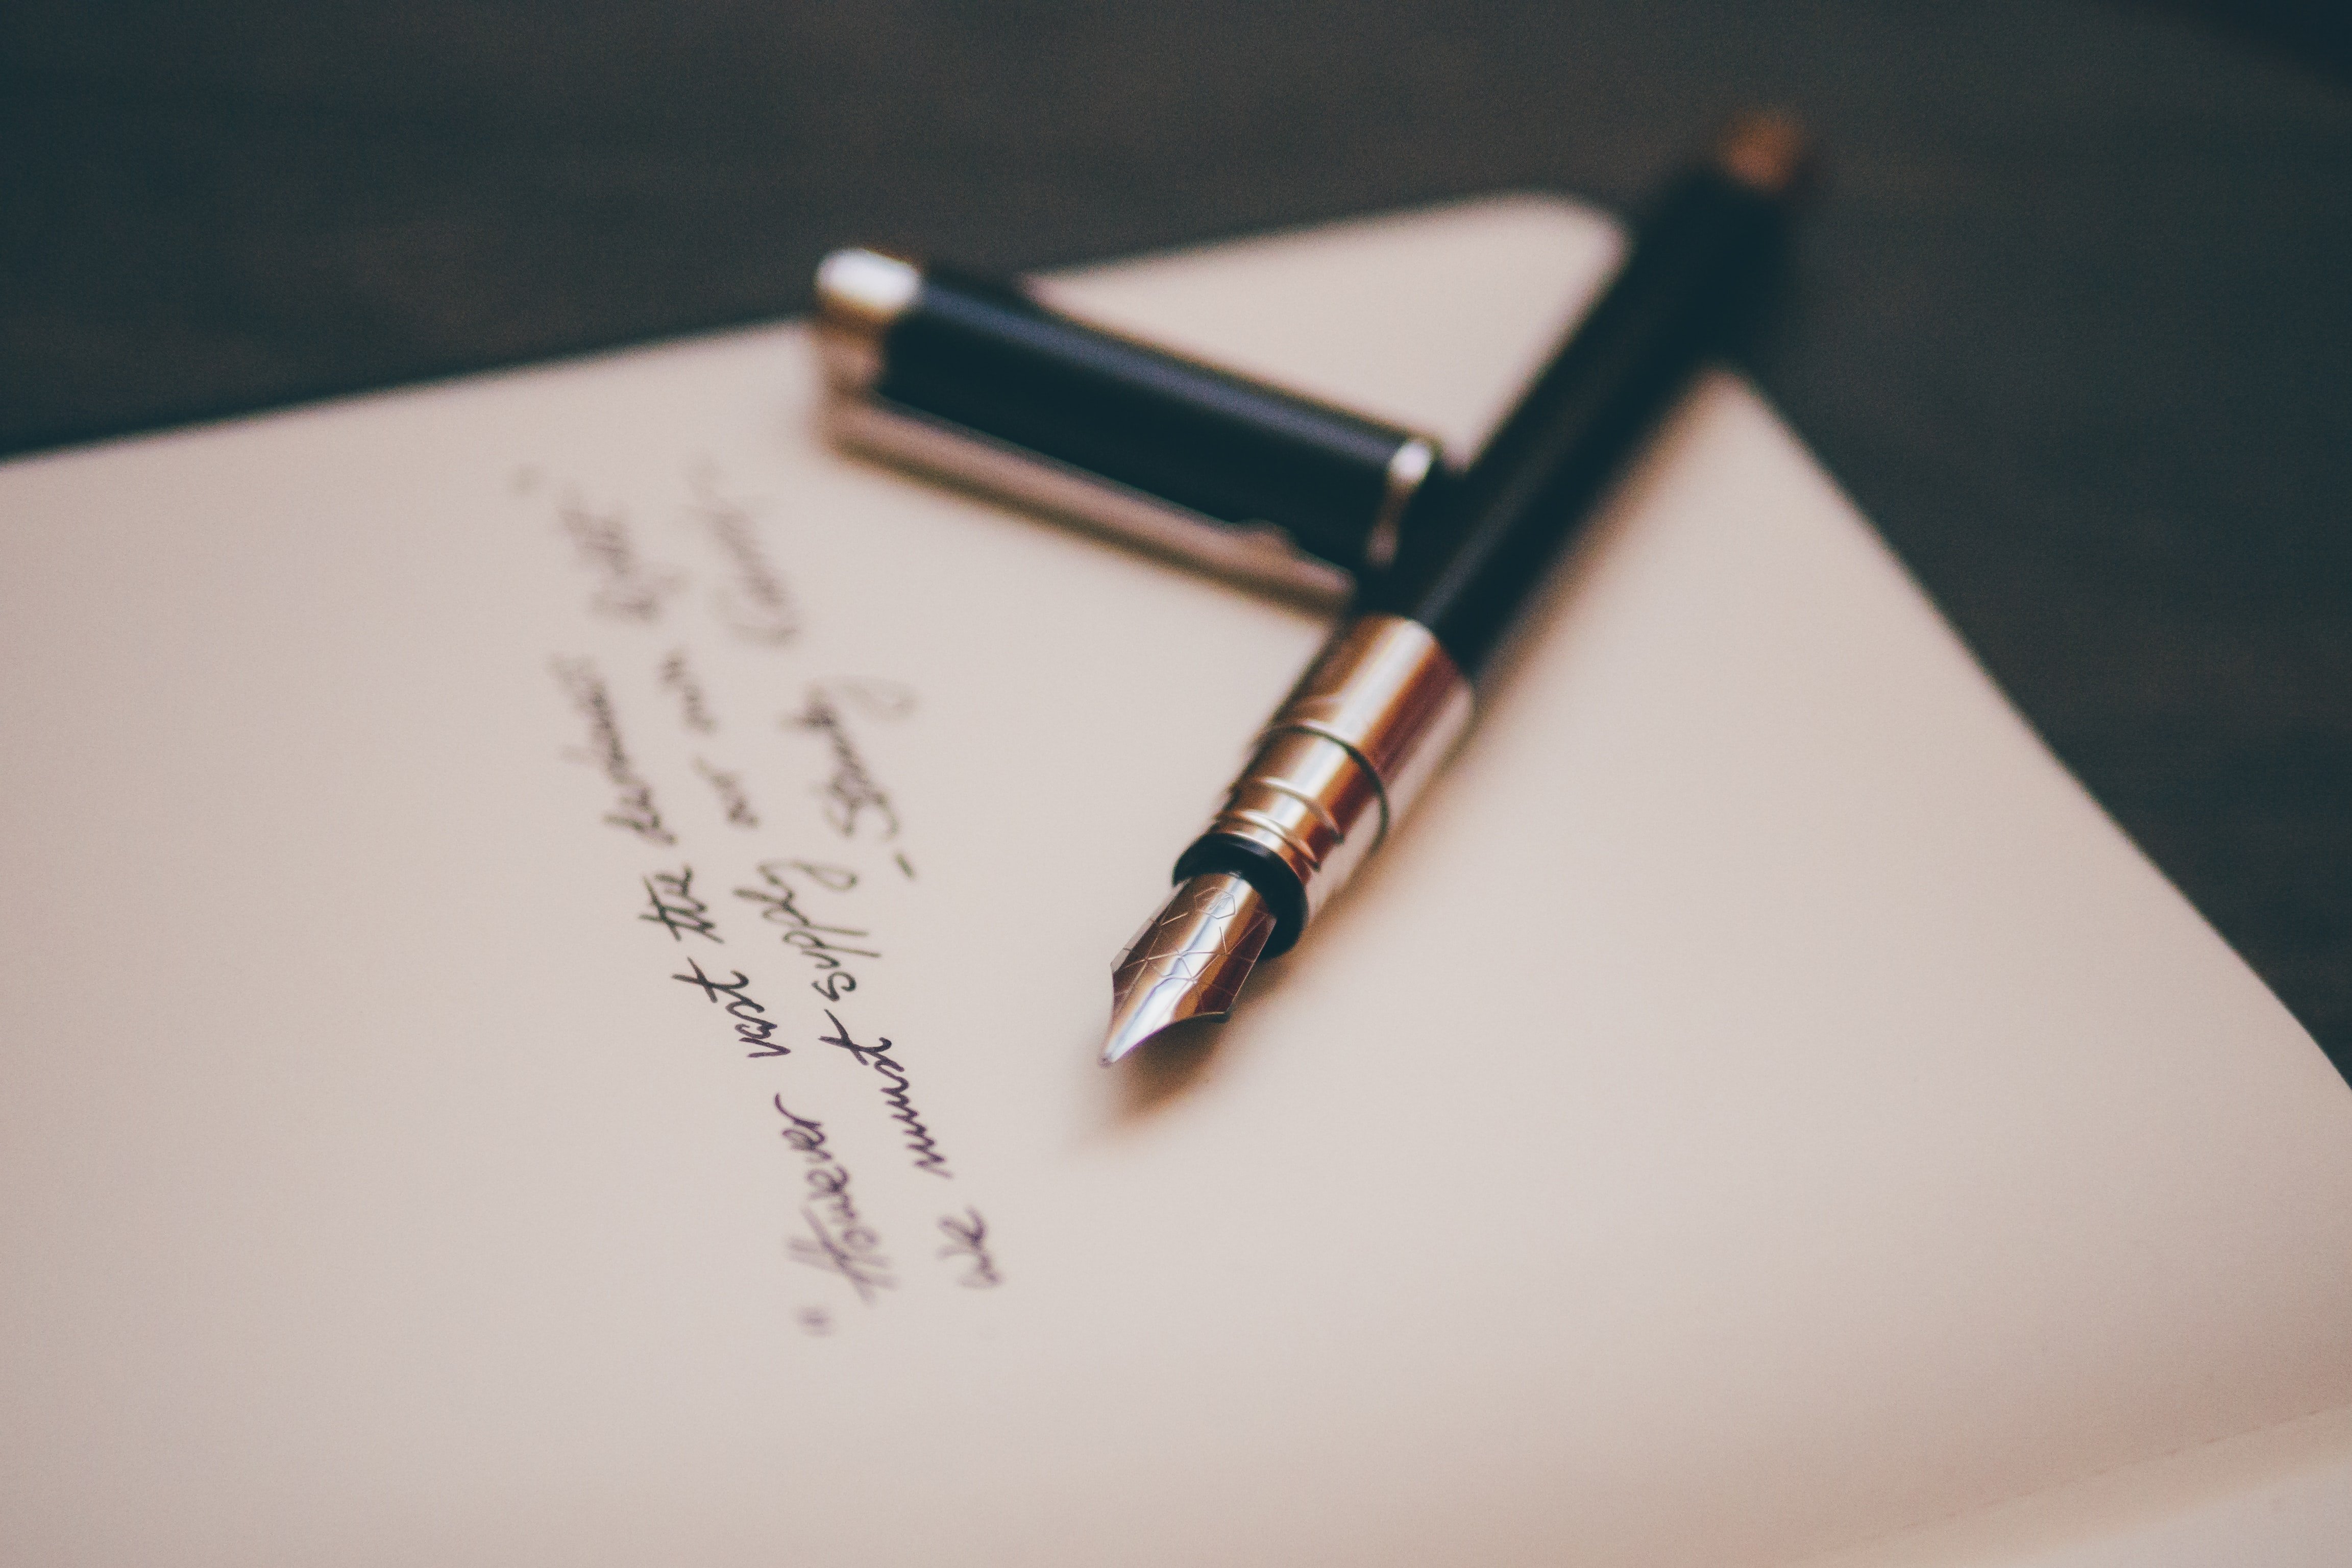 Una nota manuscrita. | Foto: Unsplash